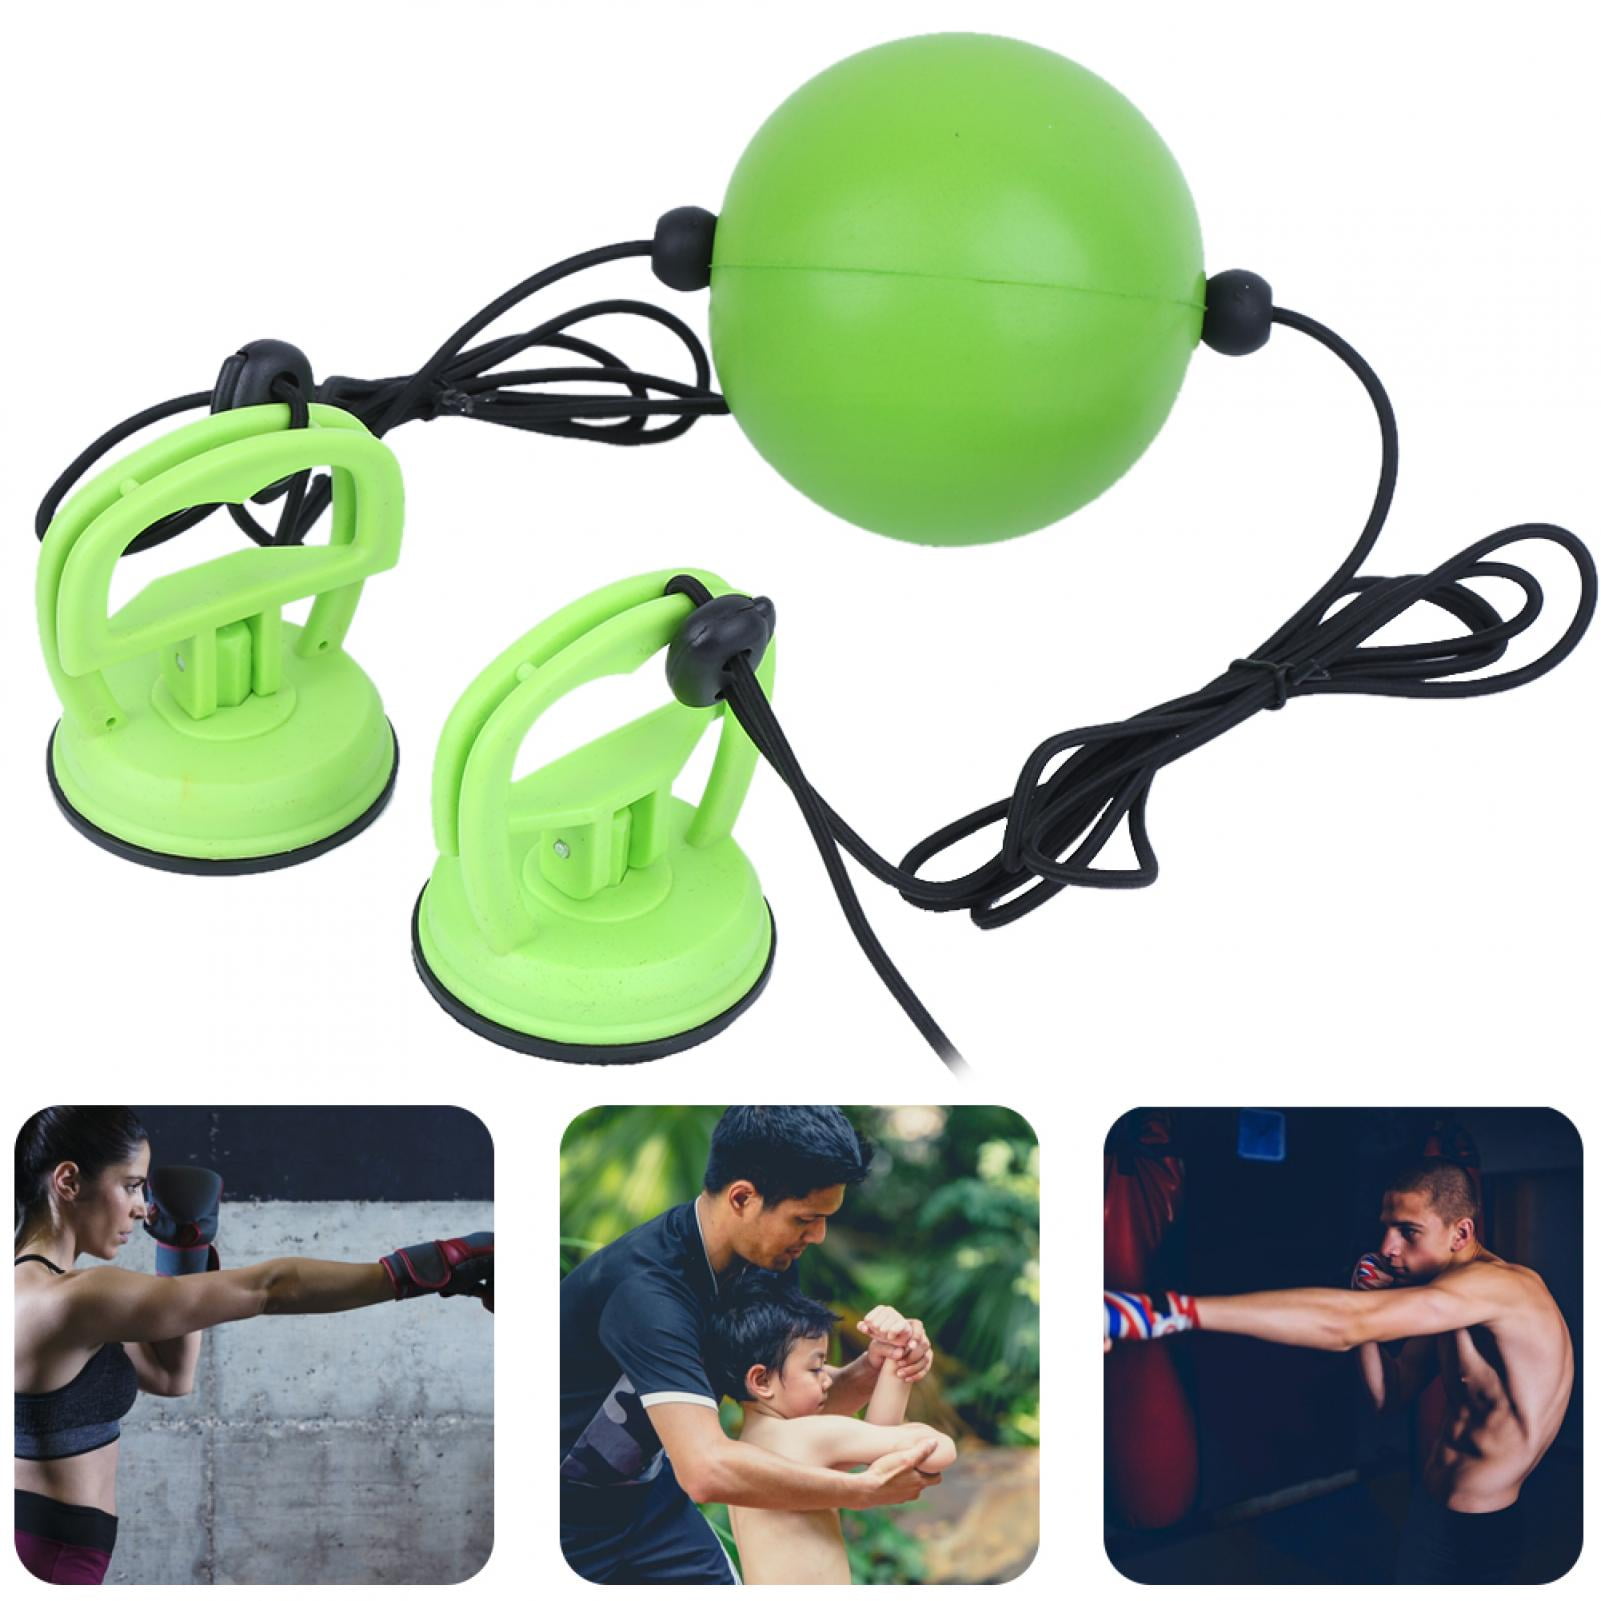 Boxing Reflex Ball – Brew Fitness Co.